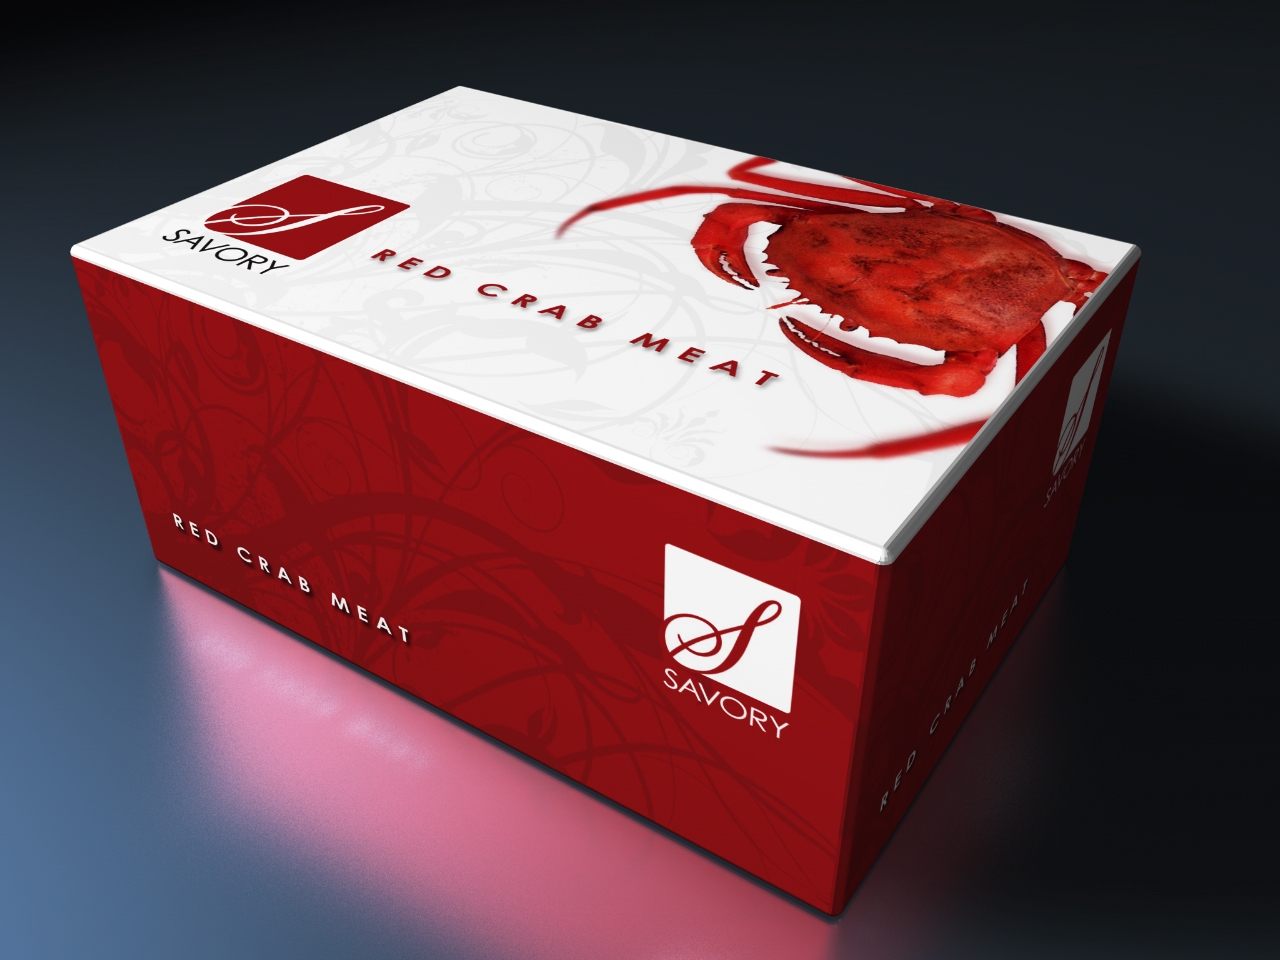 Savory Crab Packaging3